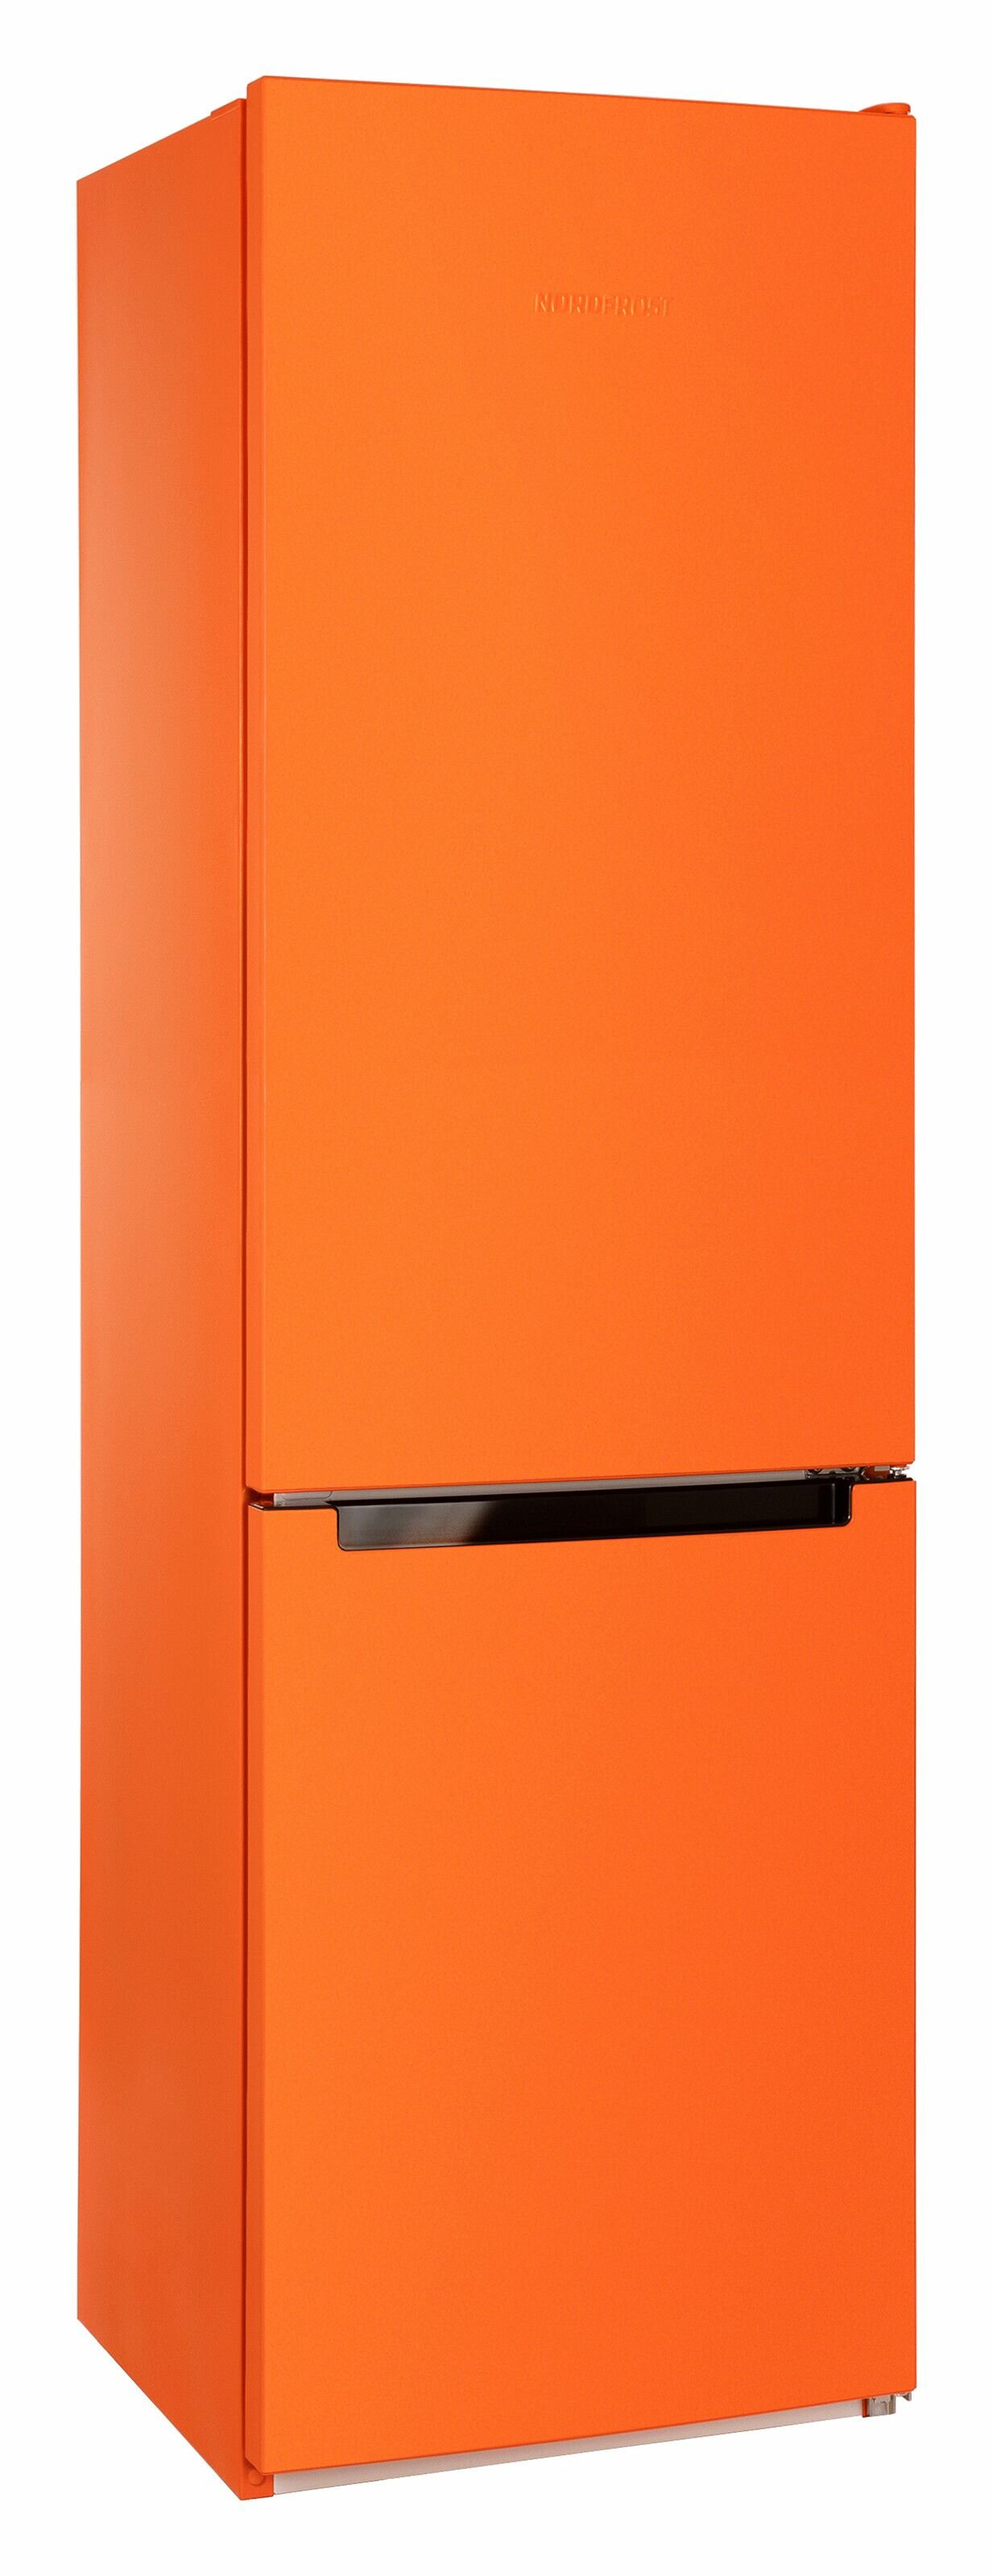 Двухкамерный холодильник NordFrost NRB 154 Or